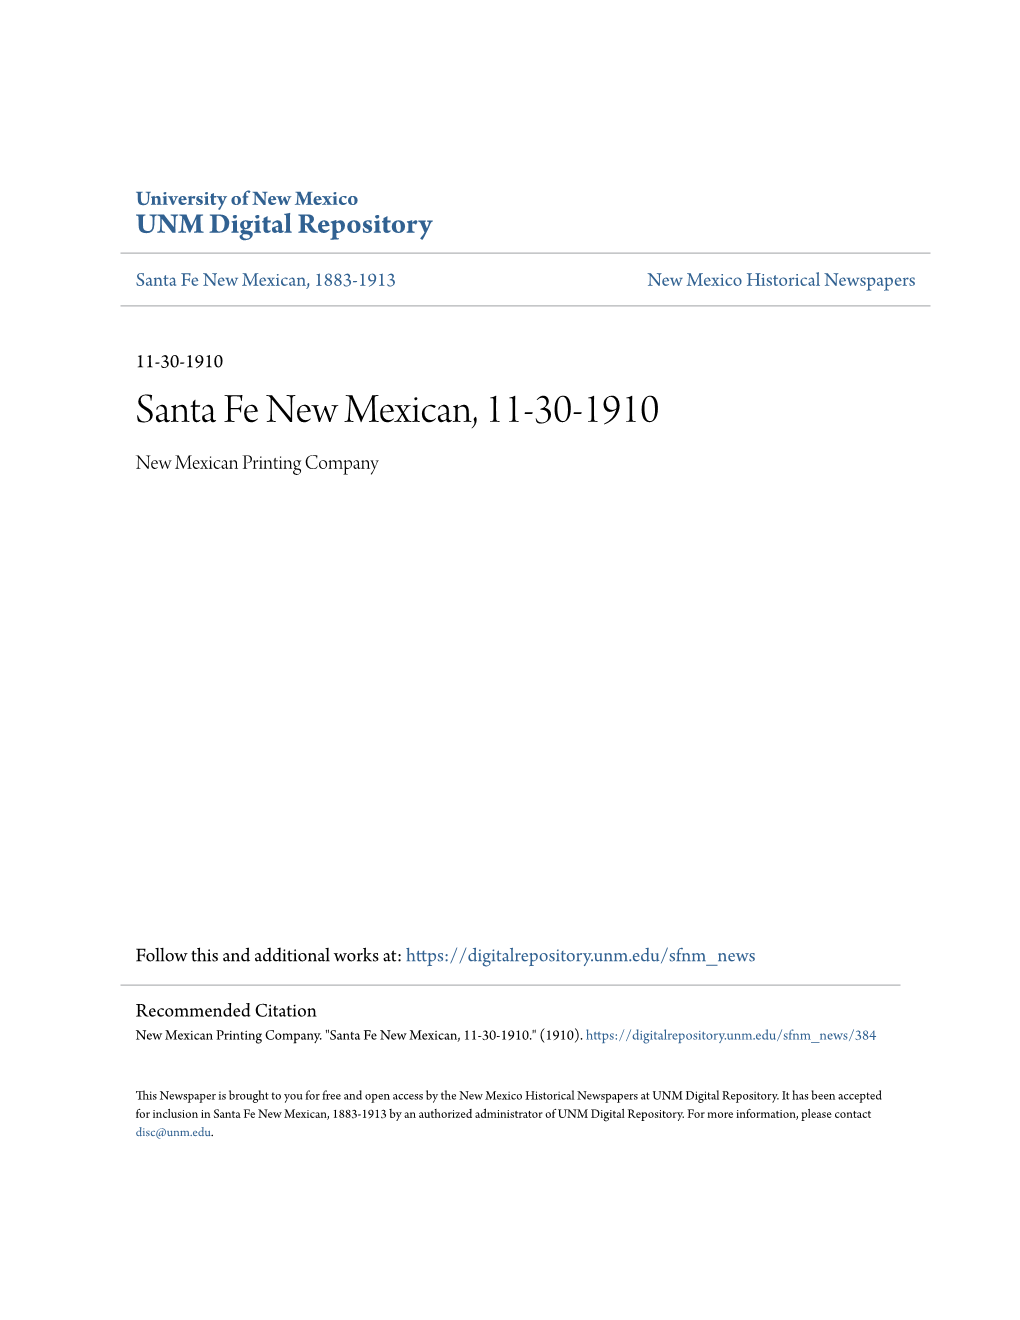 Santa Fe New Mexican, 11-30-1910 New Mexican Printing Company